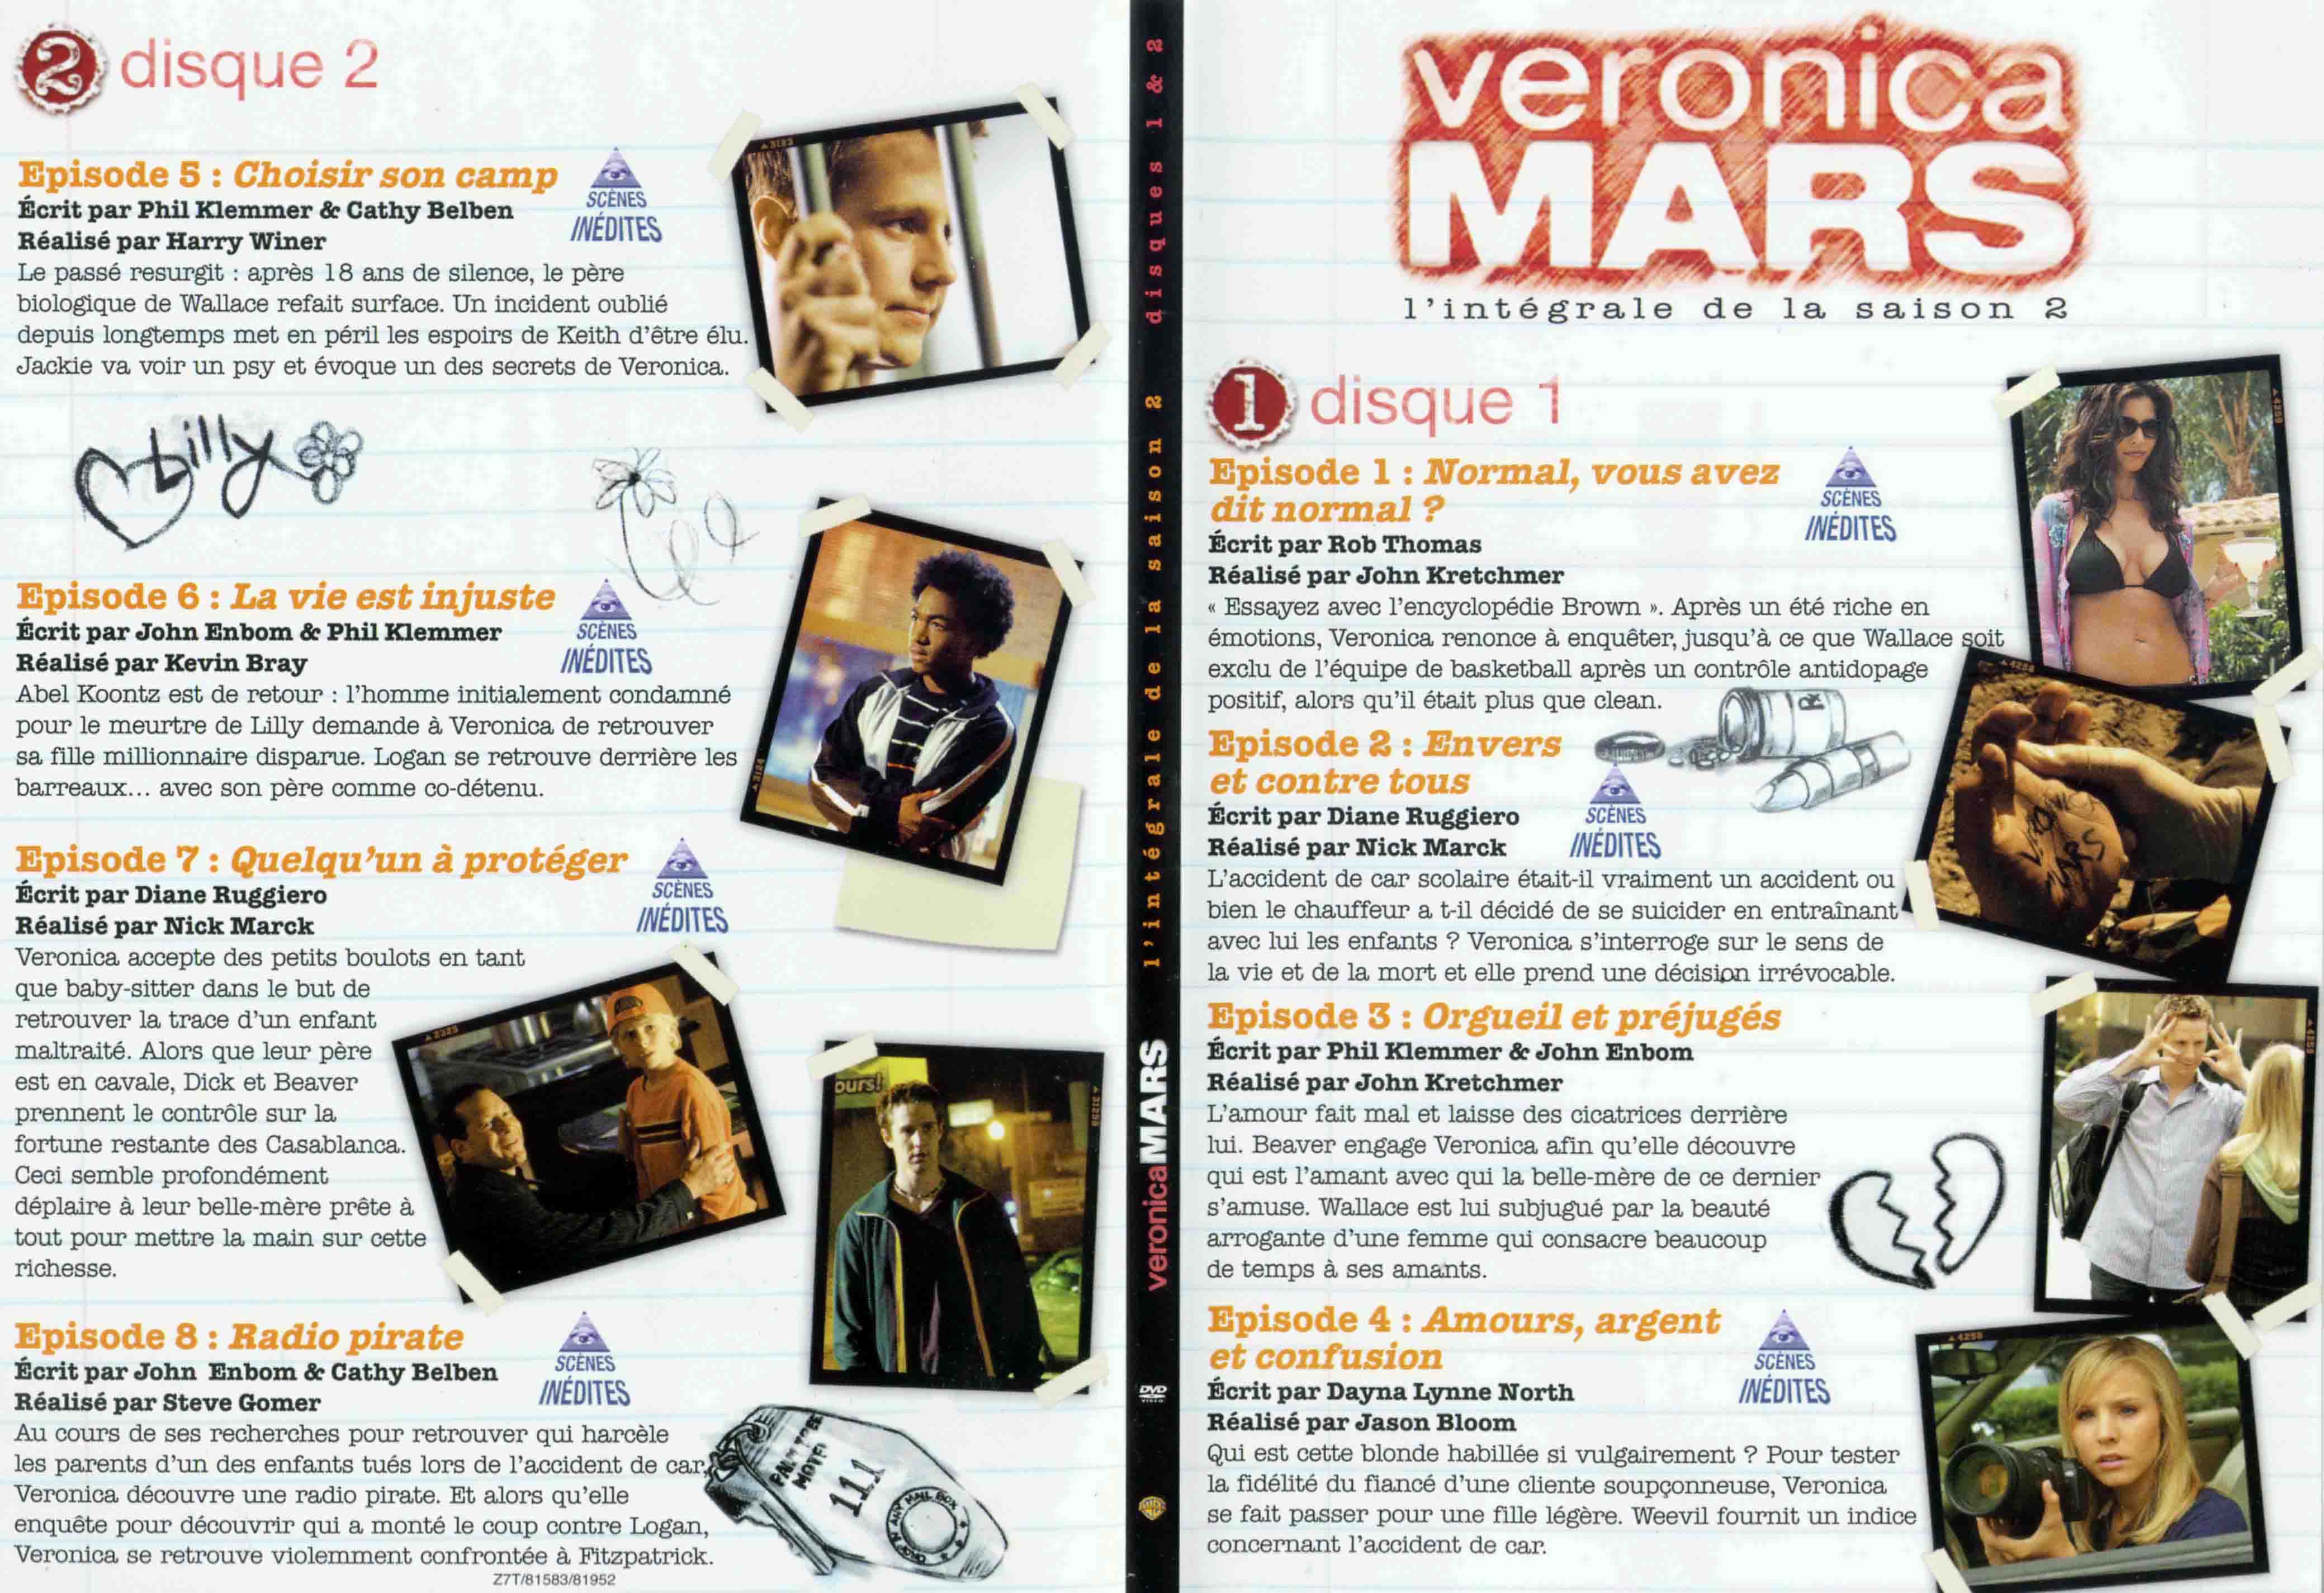 Jaquette DVD Veronica Mars Saison 2 DVD 1